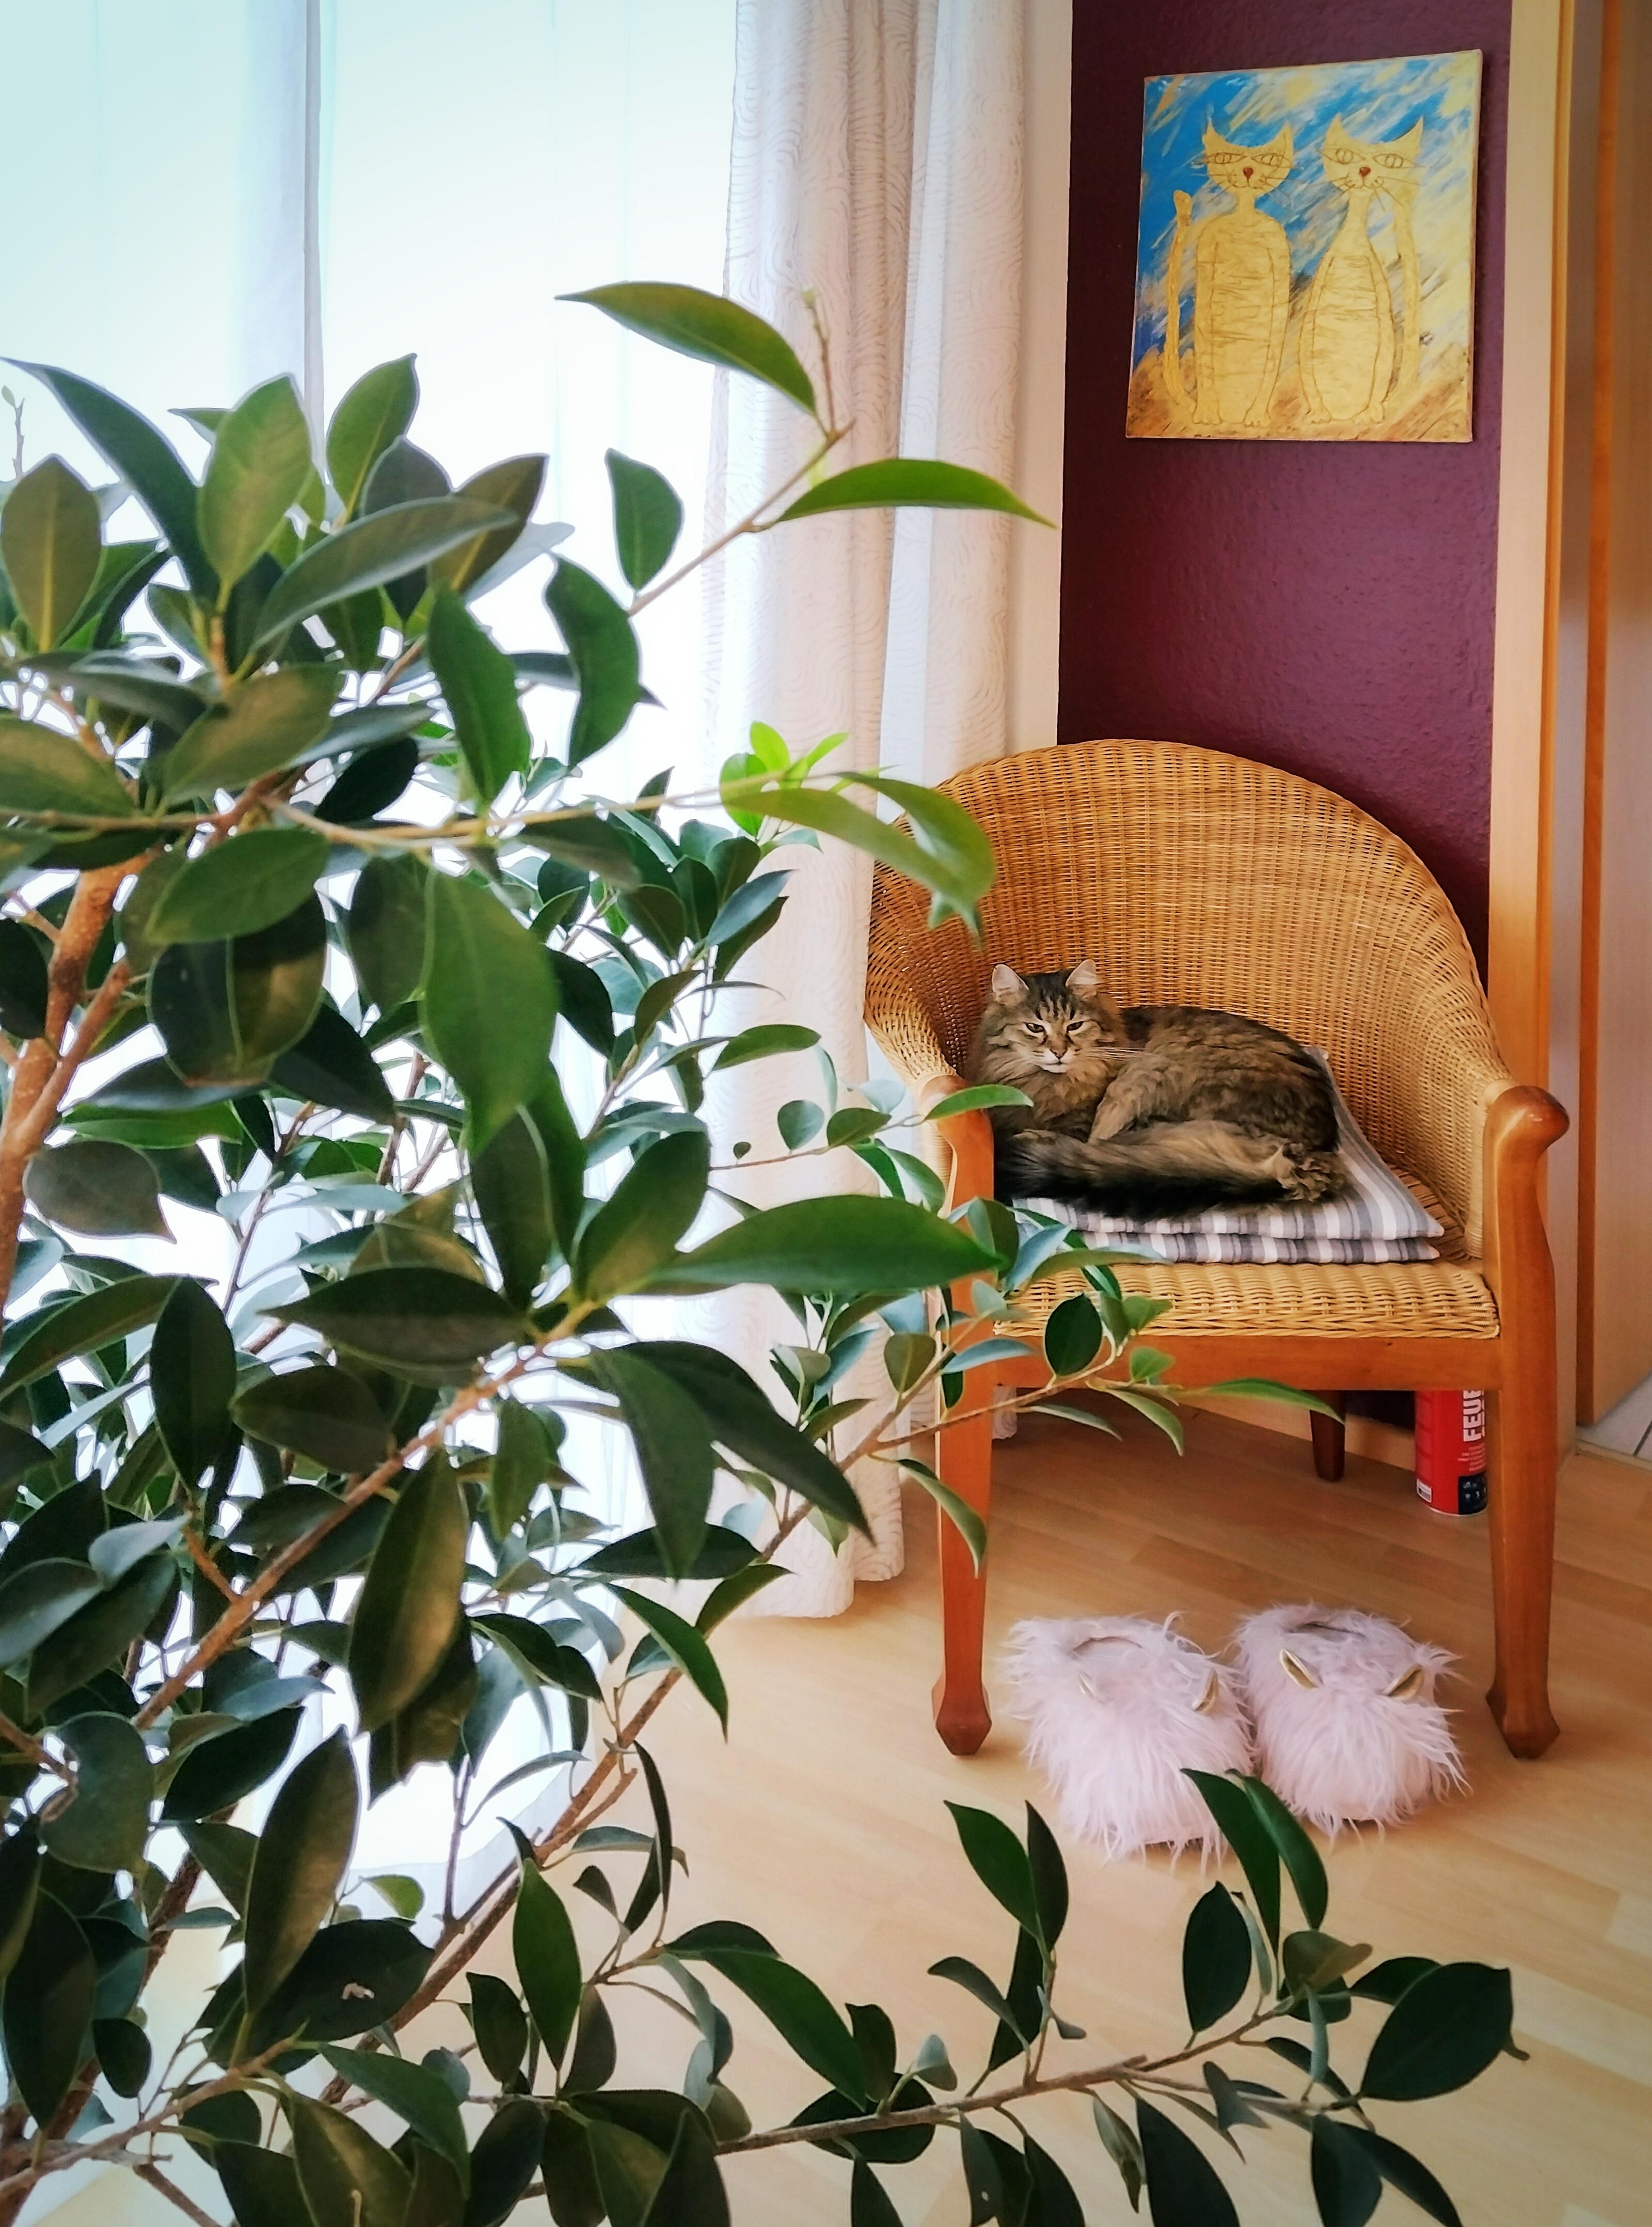 Katzenkind 🐈‍⬛❤️
#katze #katerjanosch #zimmerpflanze #bild #malerei #vintagesessel #lilawand #farbenfroh #diymalerei